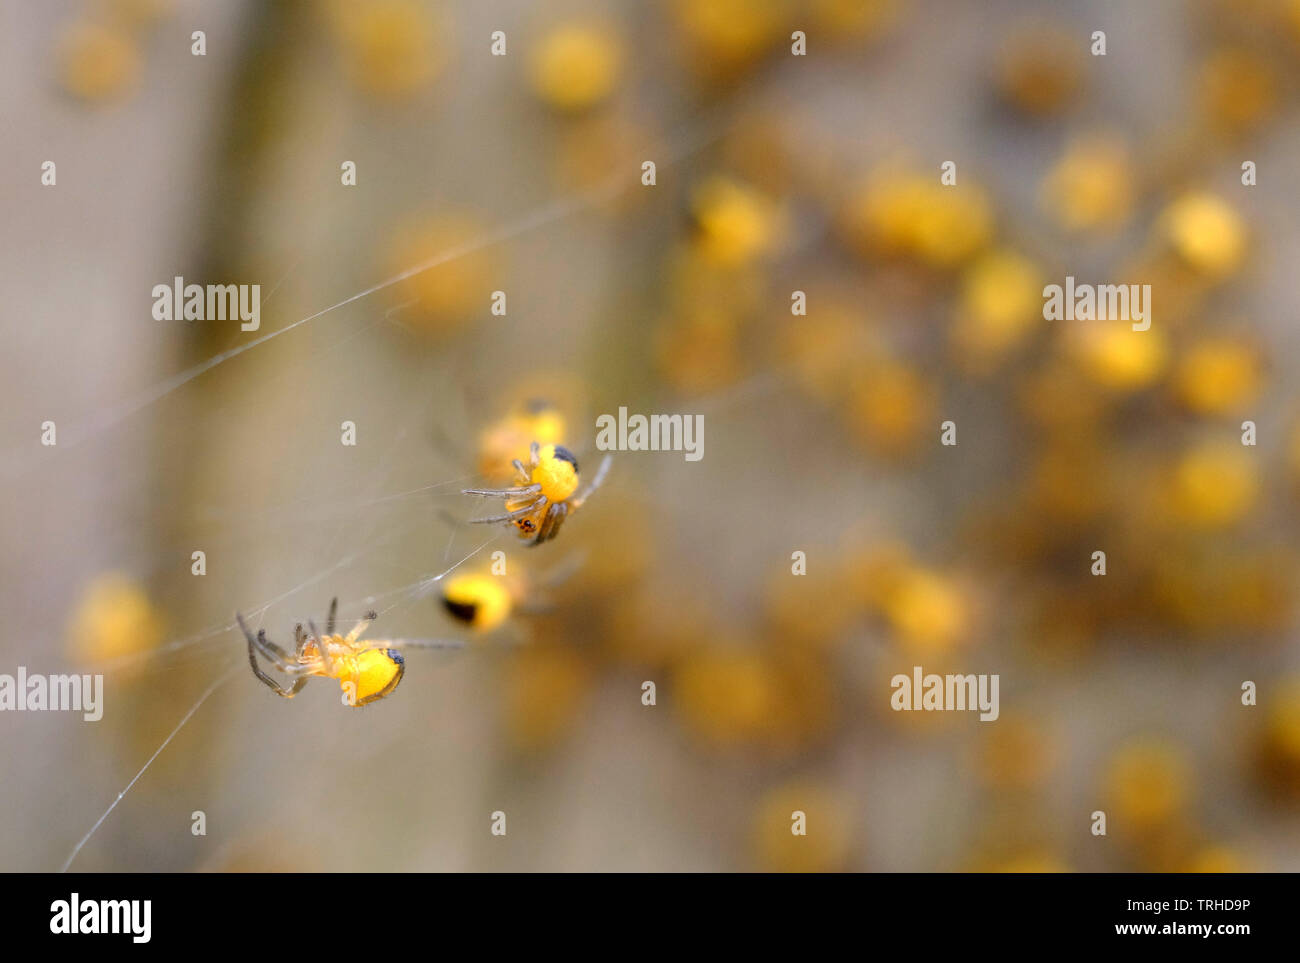 Jardin bébé araignées, Araneus diadematus ou orbweaver. Banque D'Images